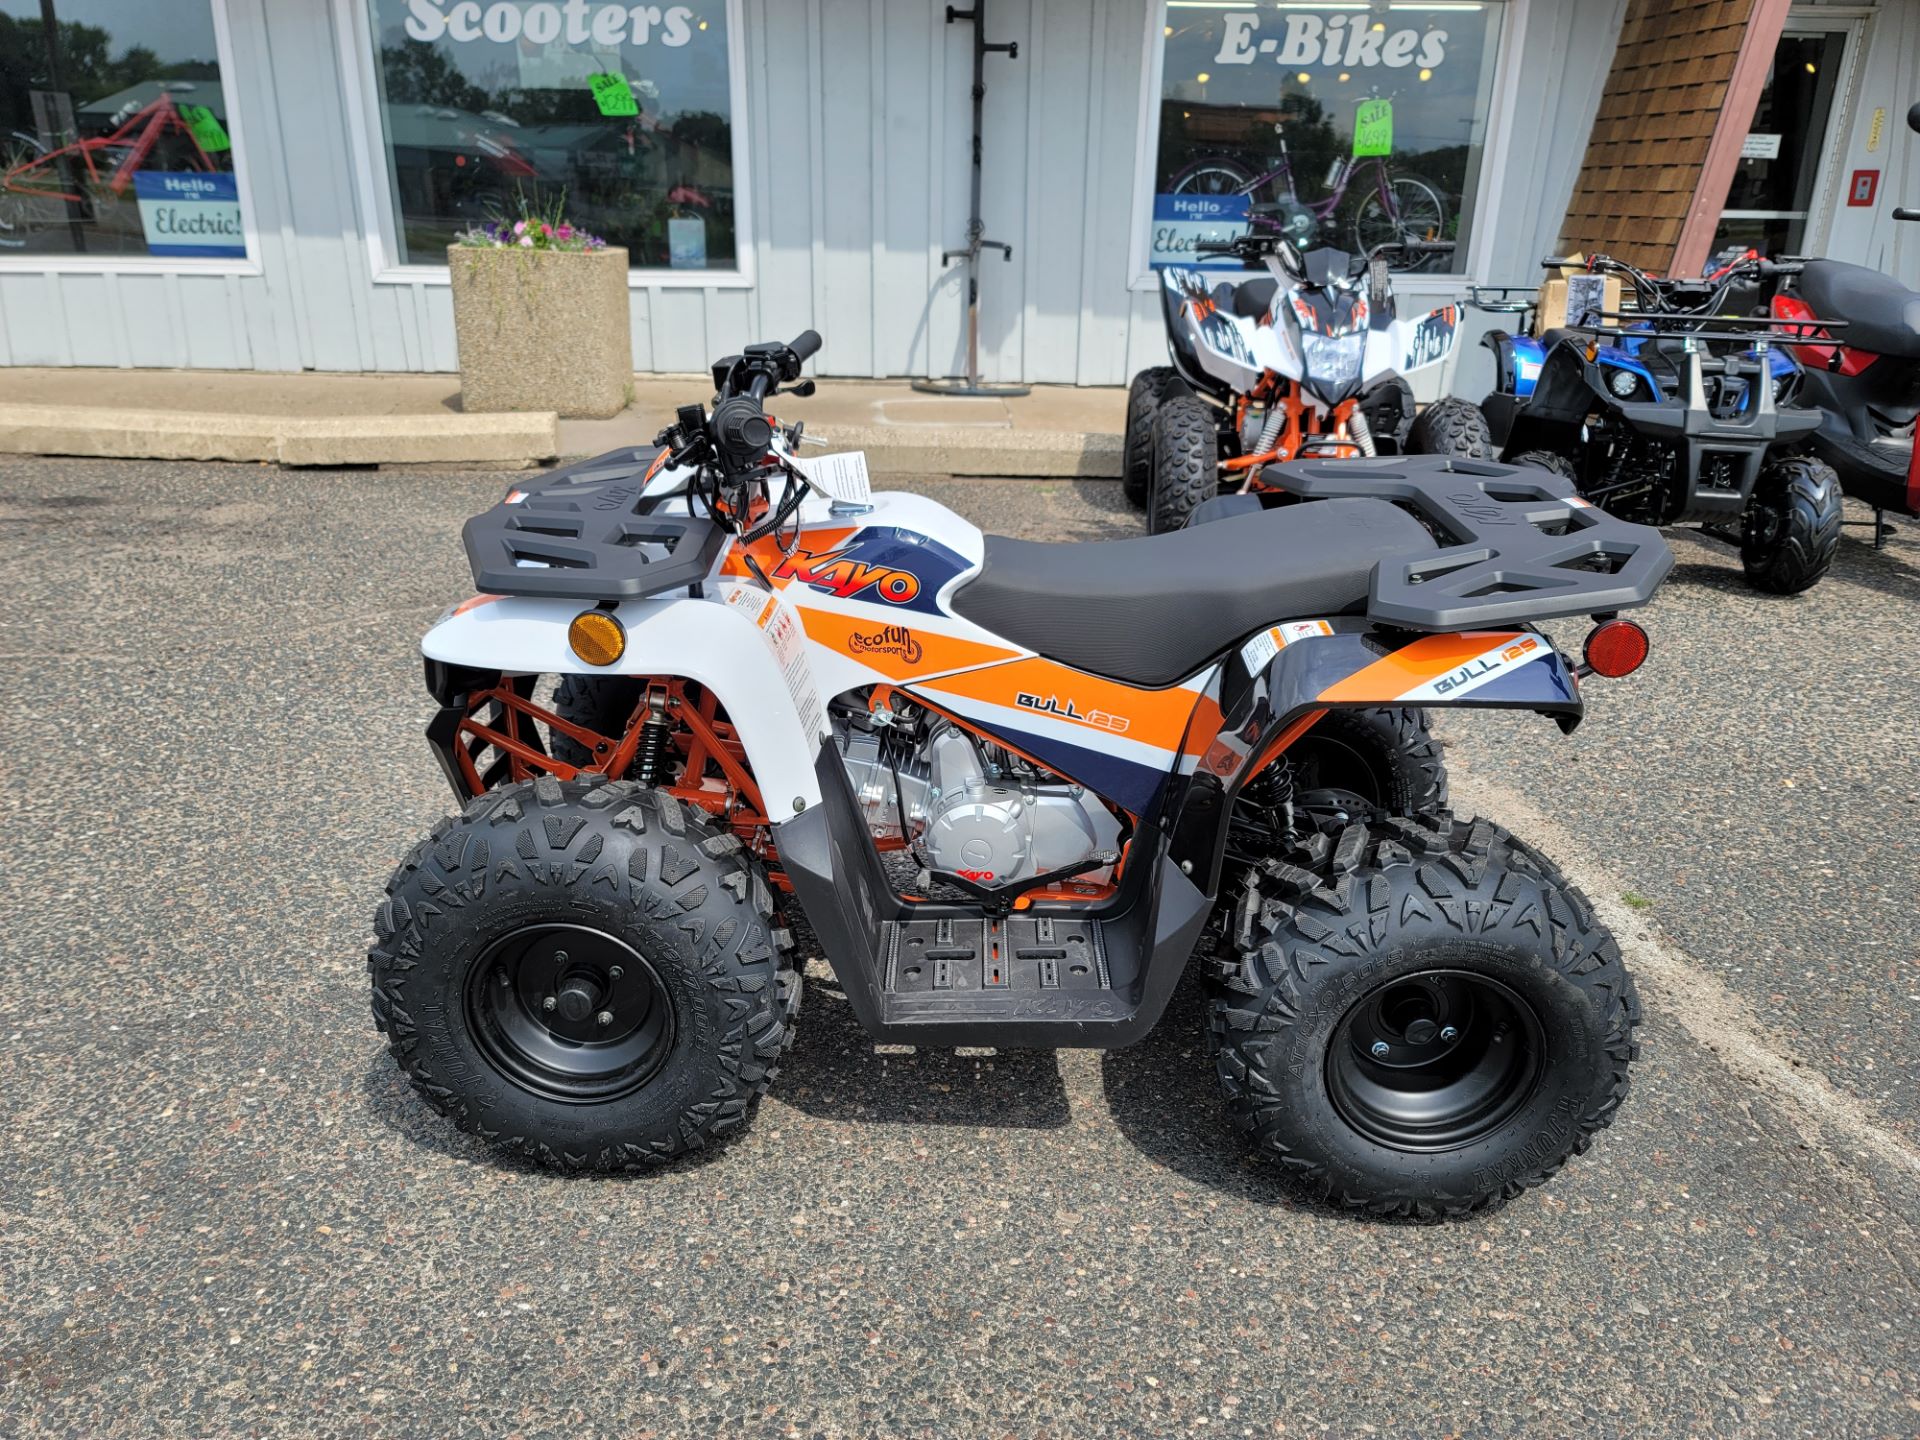 2022 Kayo Bull 125cc Youth ATV in Forest Lake, Minnesota - Photo 4